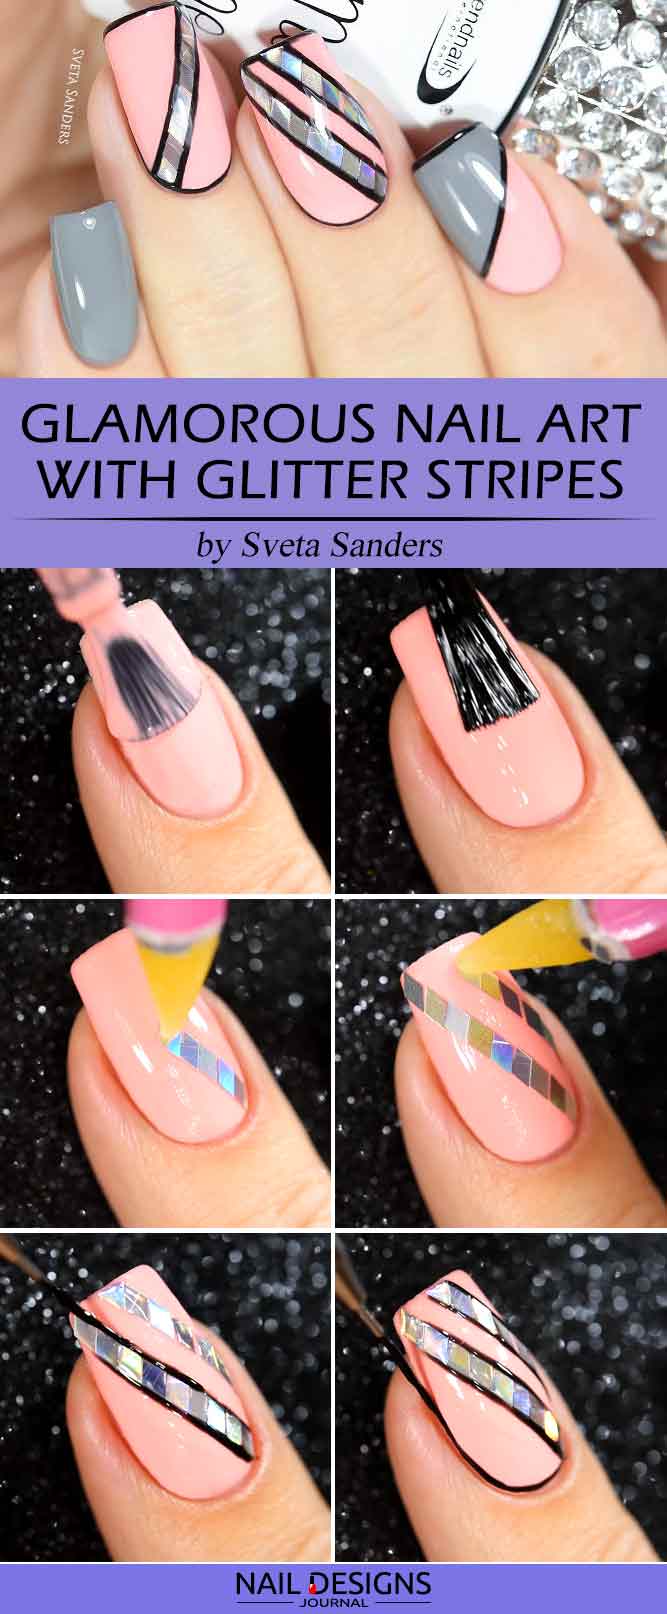 Glamorous Nail Art With Glitter Stripes